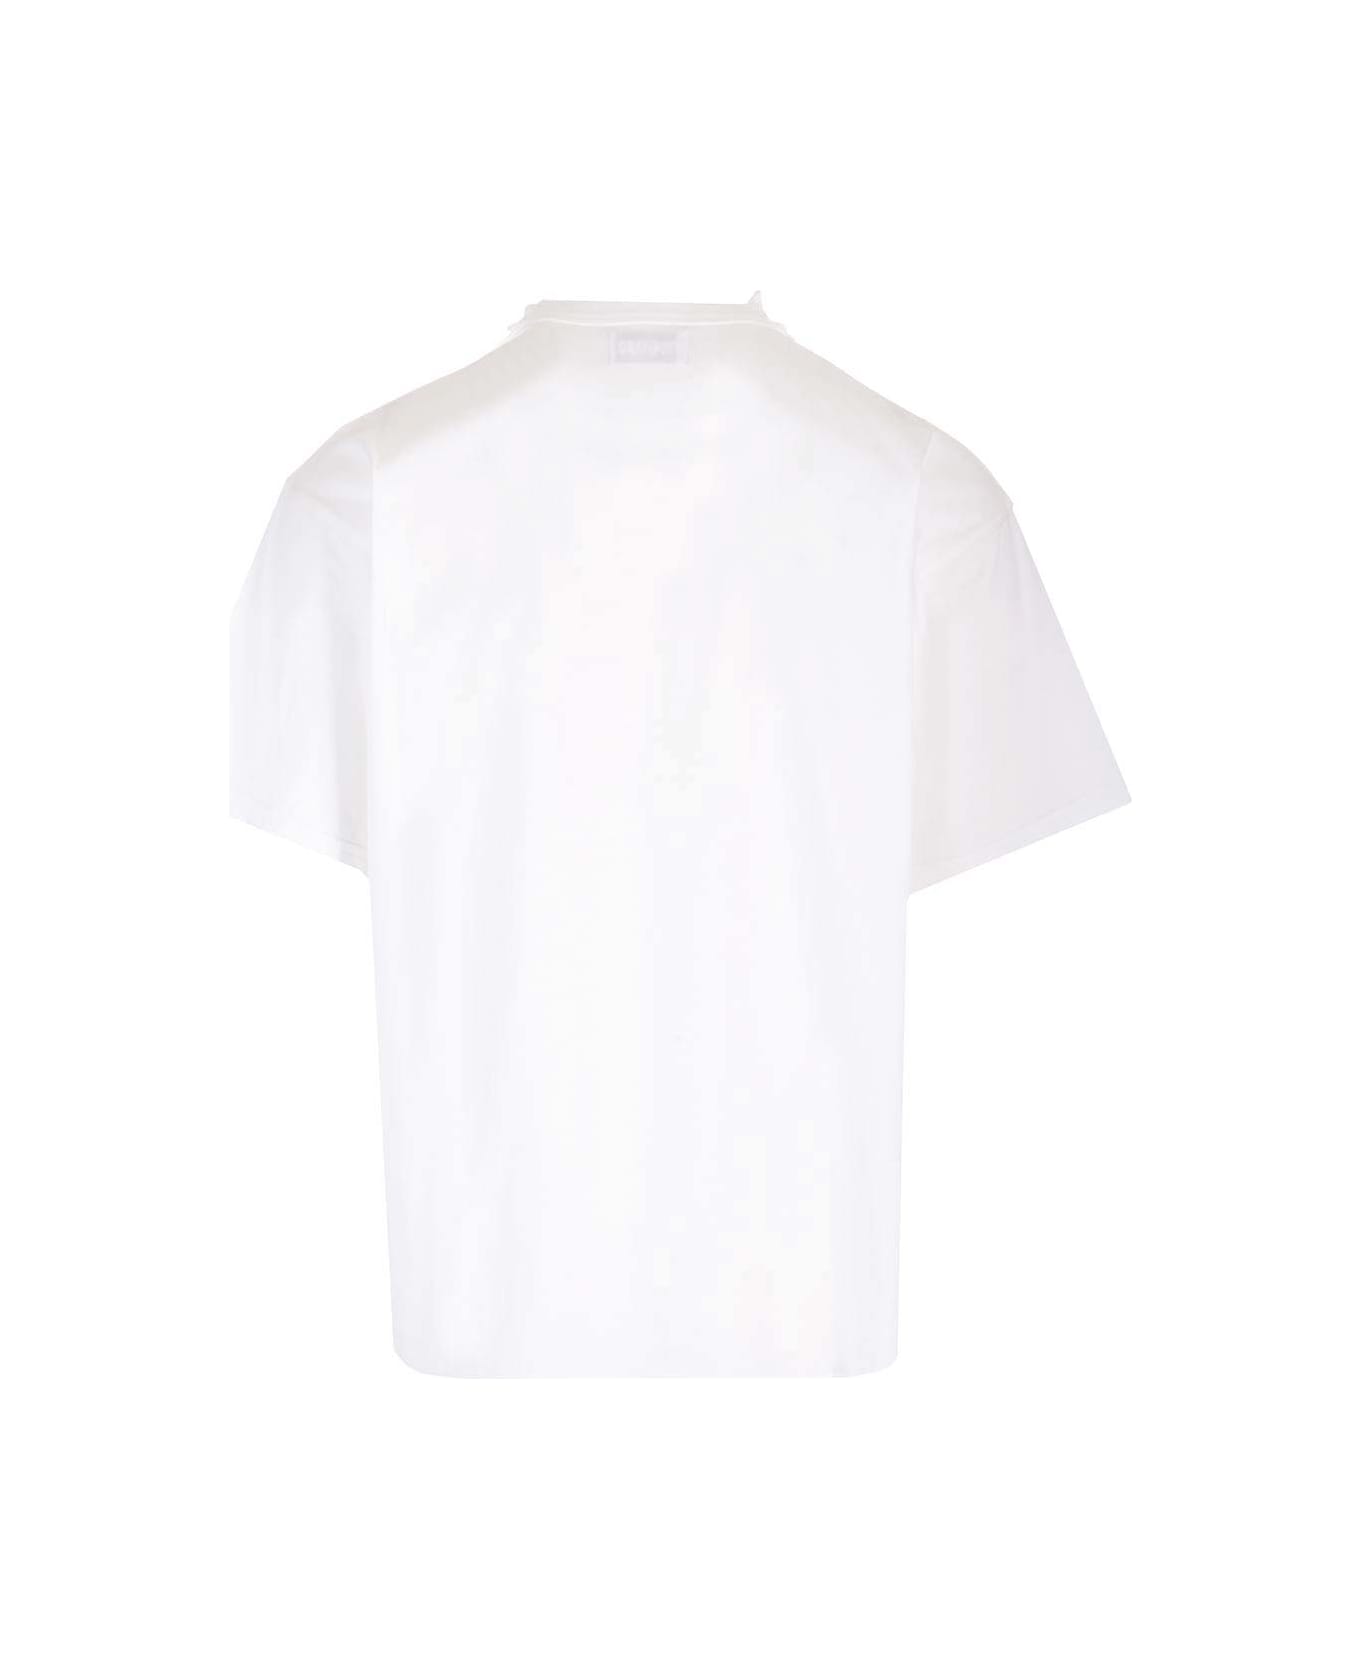 Magliano 'i Suffer' T-shirt - White